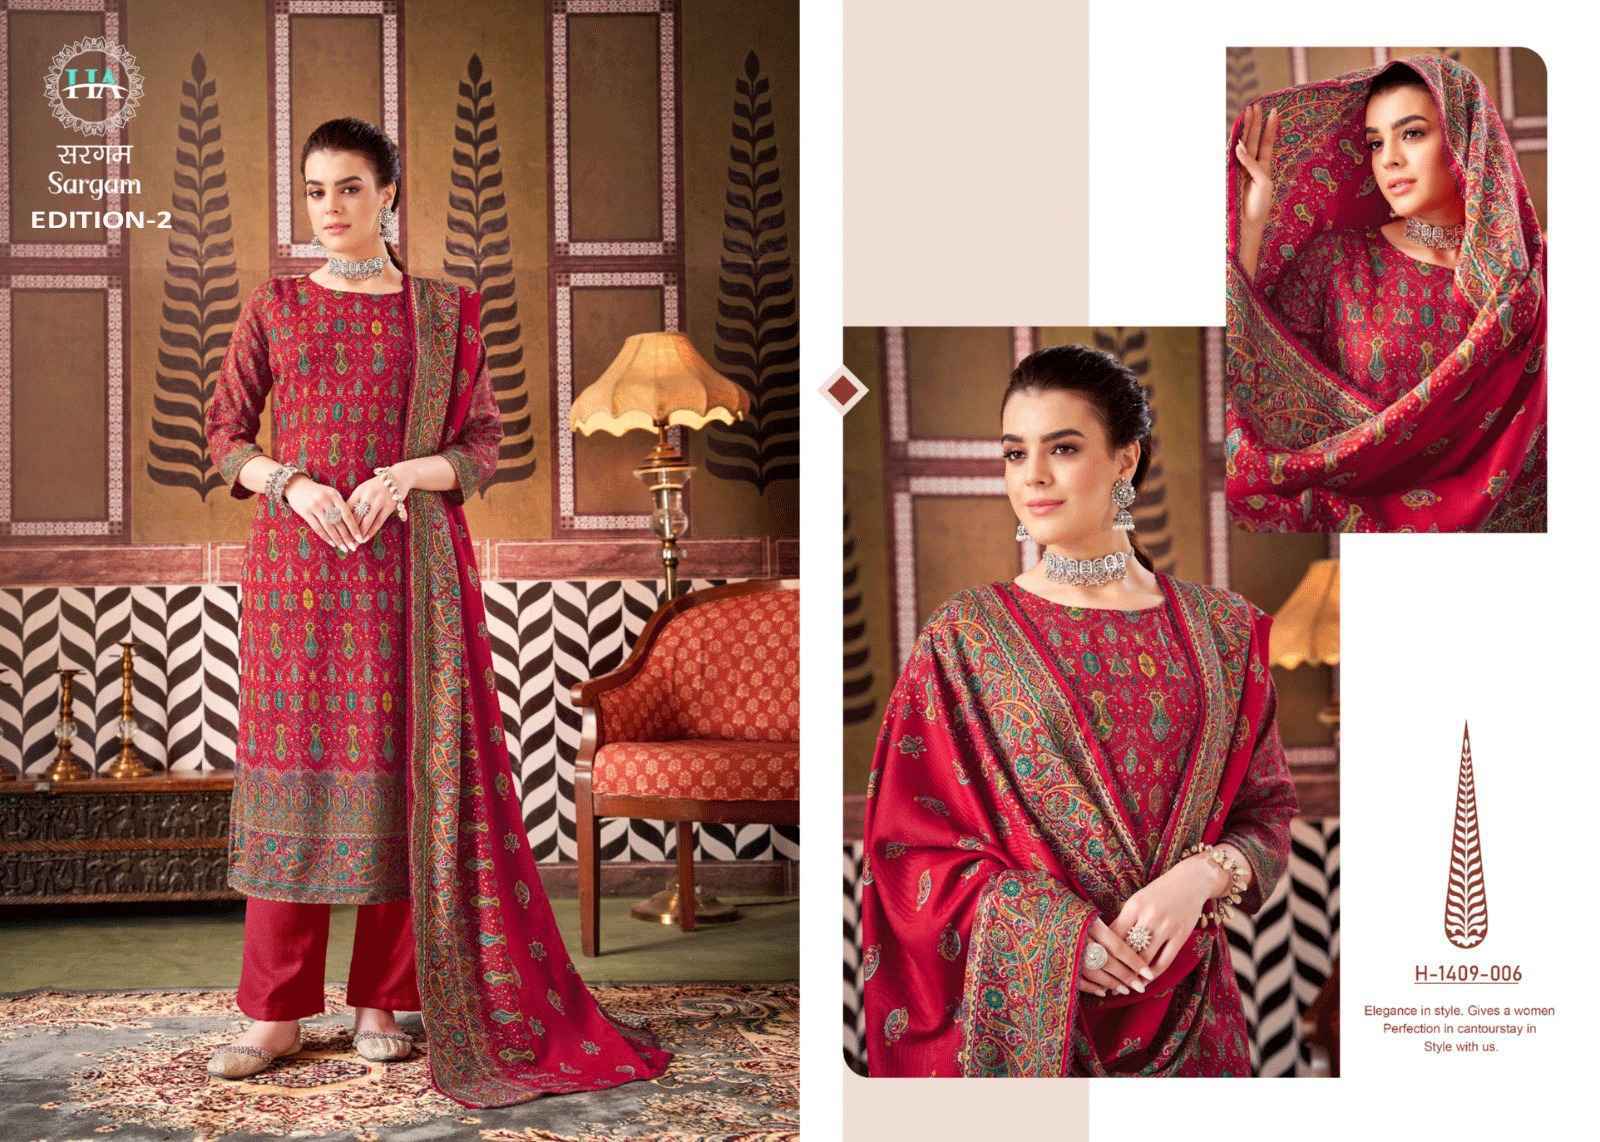 Harshit Fashion Hub Sargam Pashmina Dress Material 8 pcs Catalogue